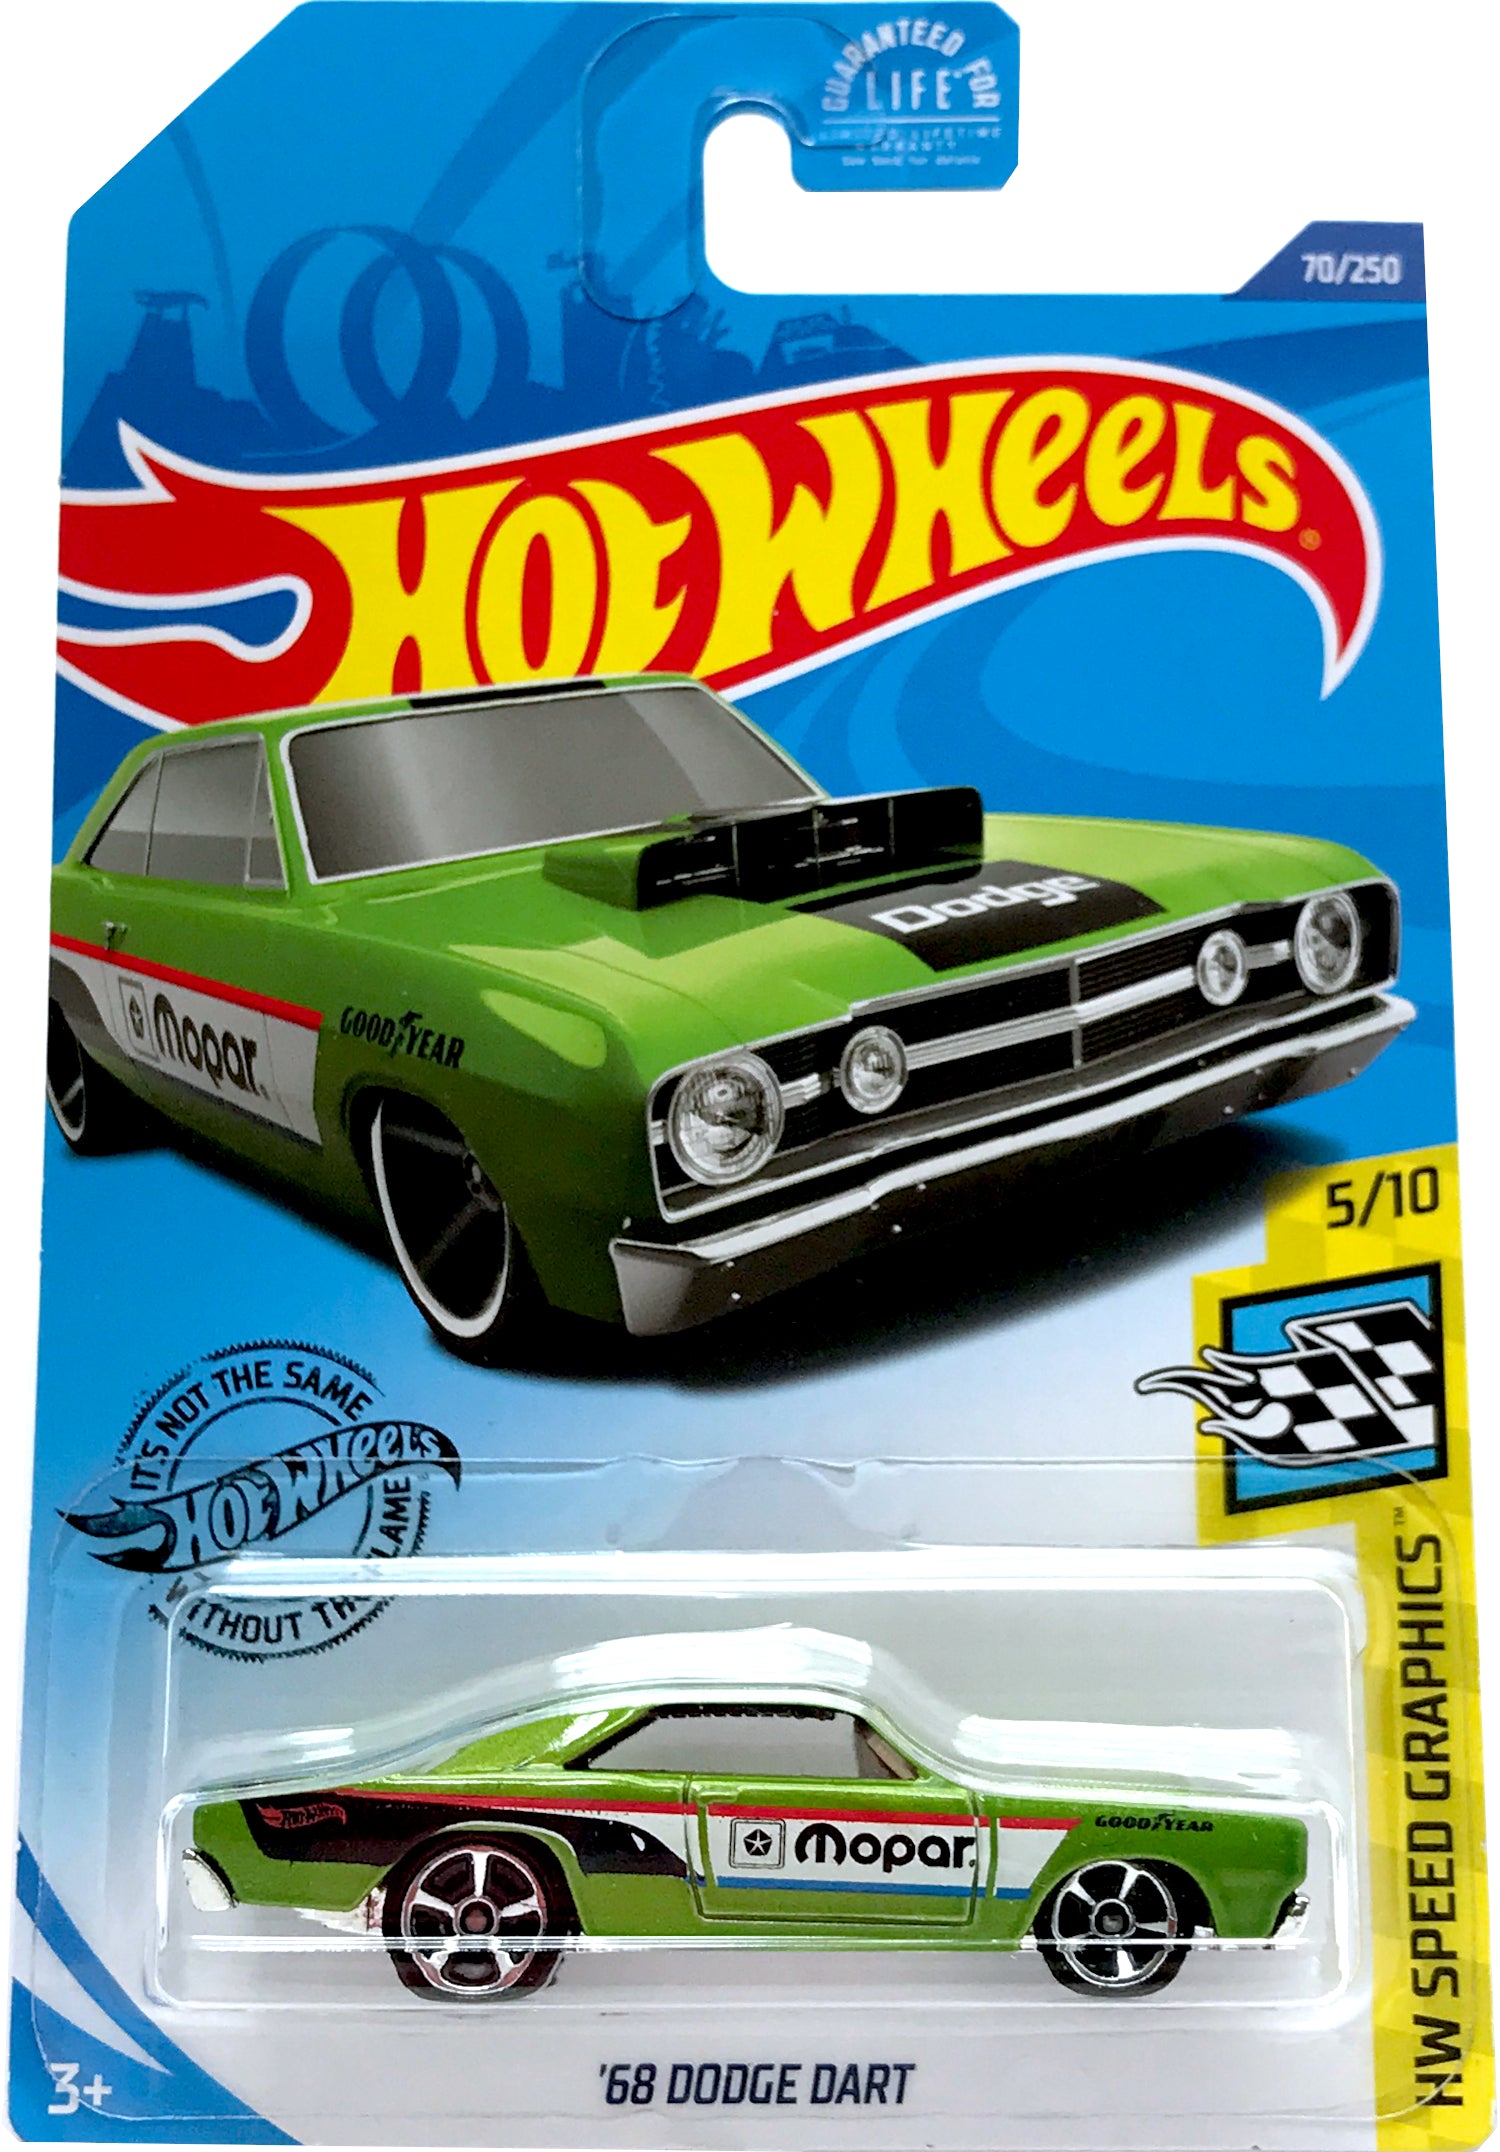 2020 Hot Wheels Mainline #070 - '68 Dodge Dart (Green) GHC87